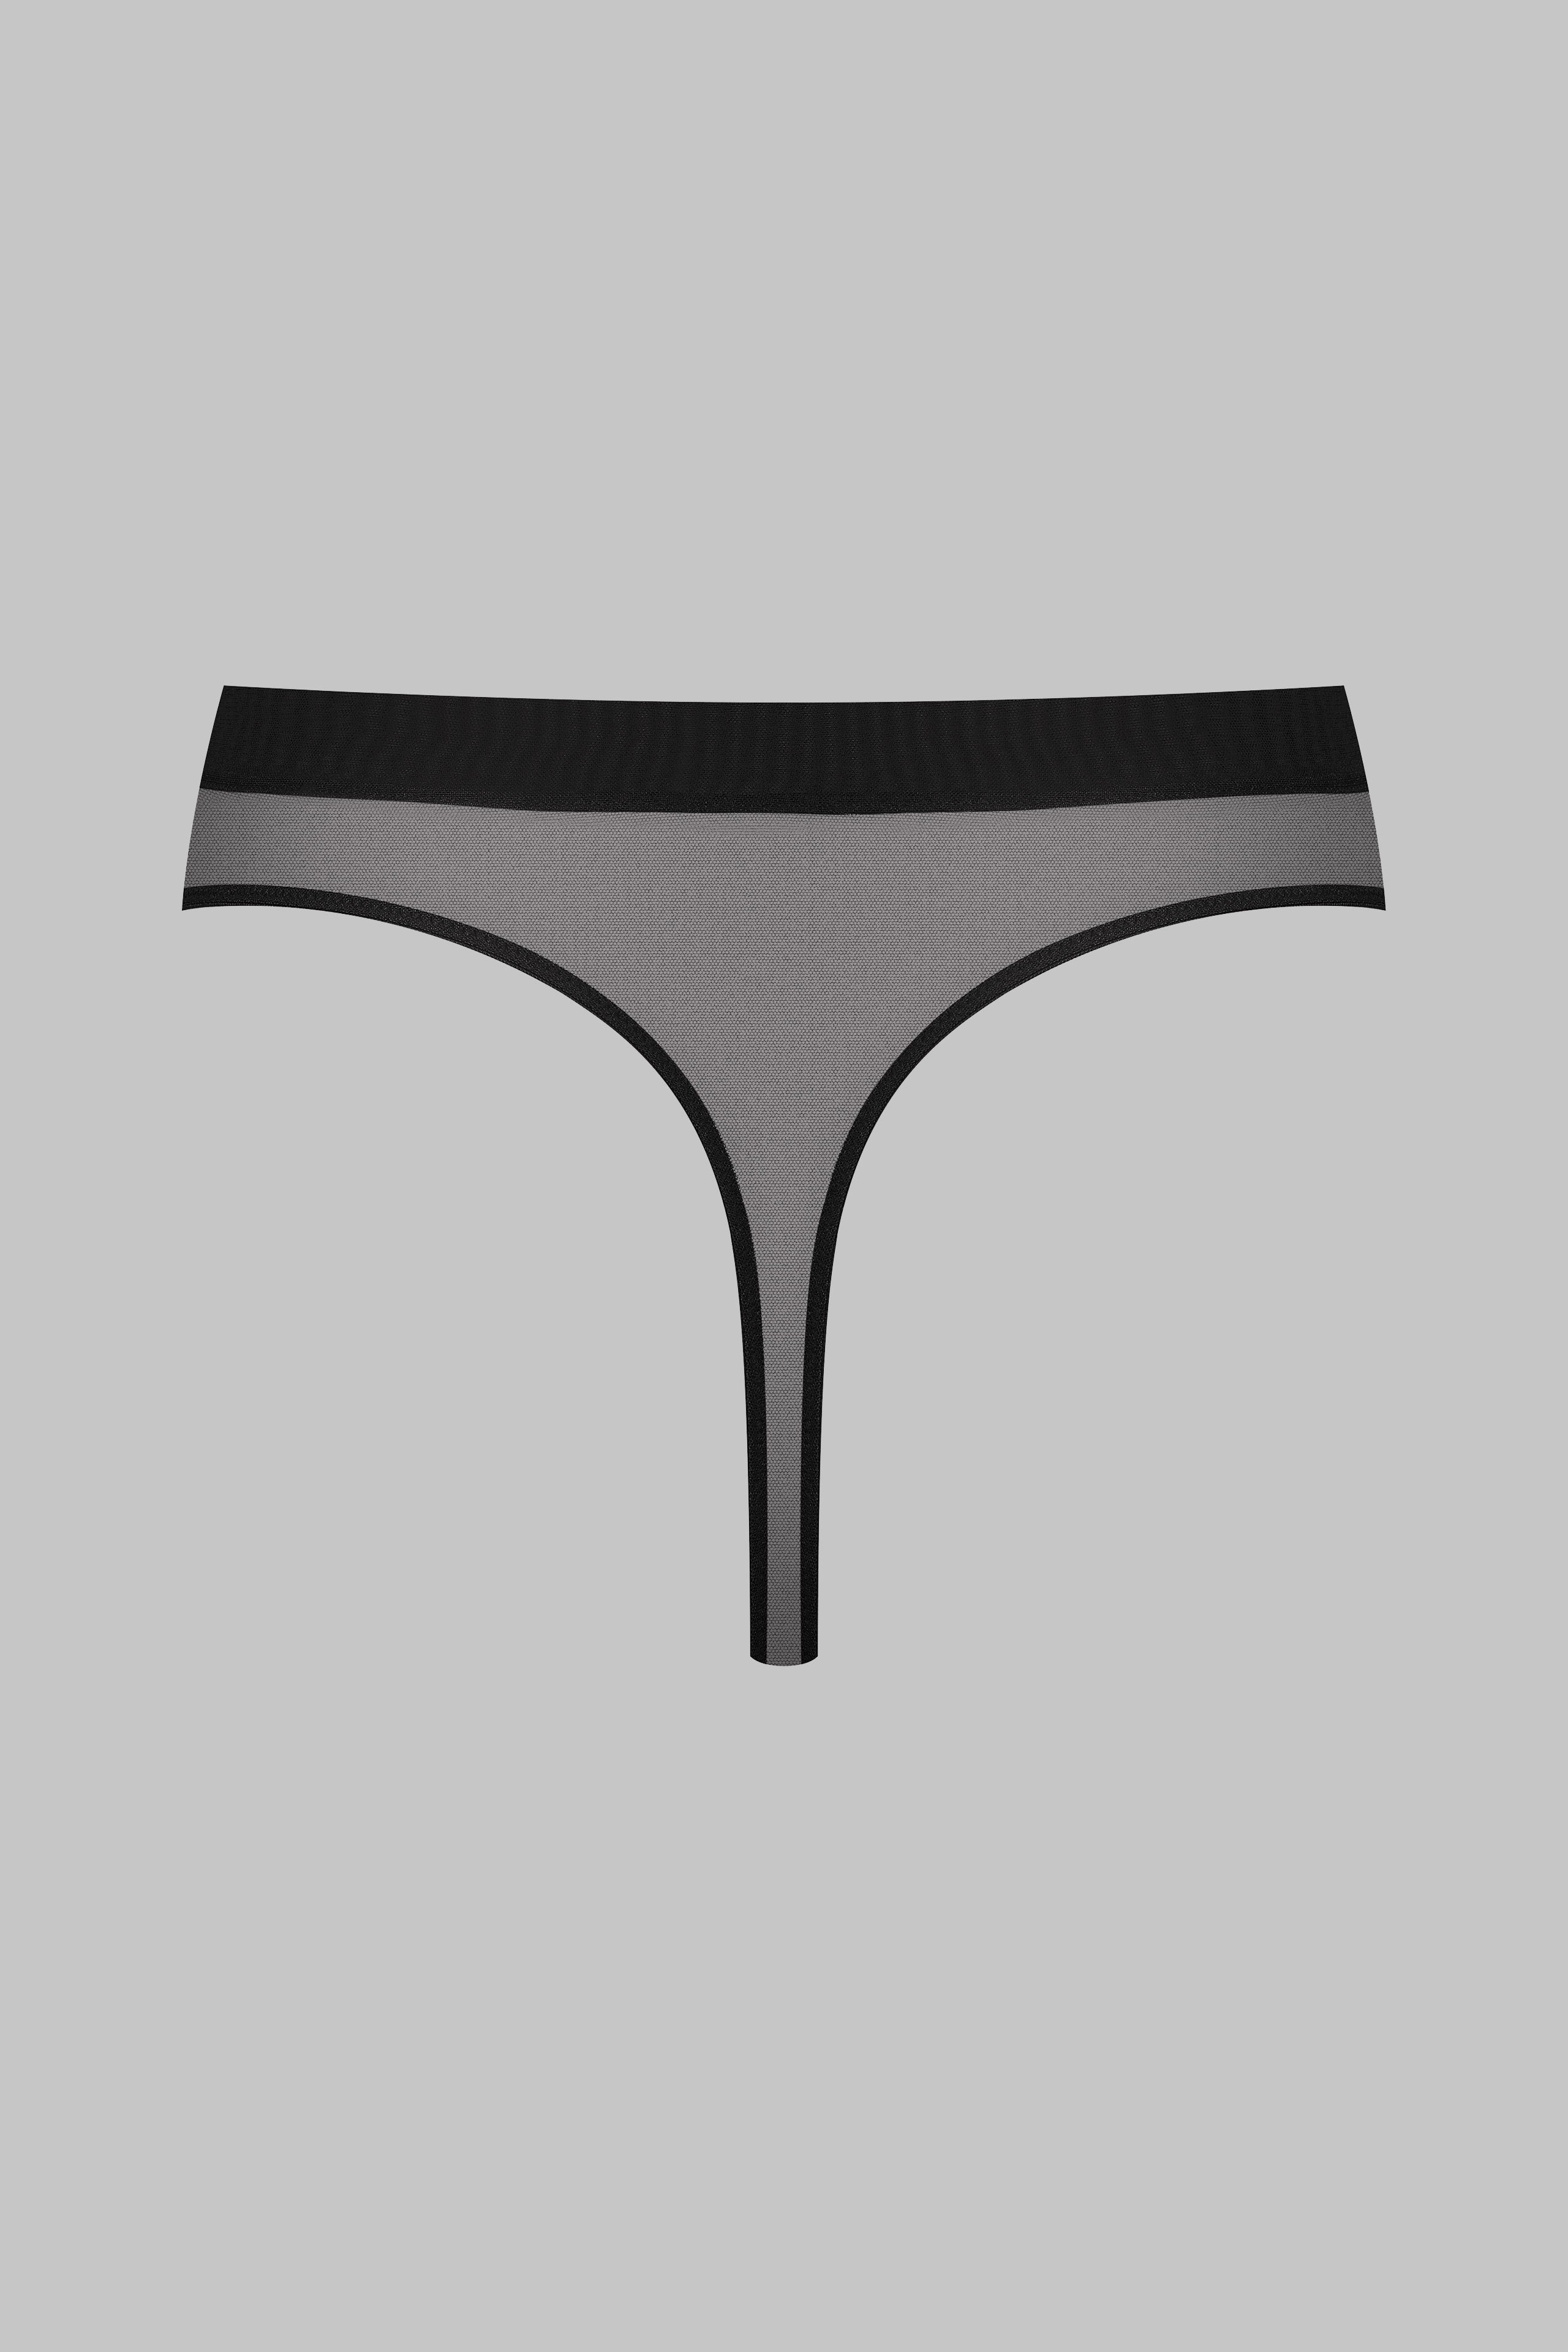 High-waisted Lace Panties Black Calvin Klein Underwear - Women